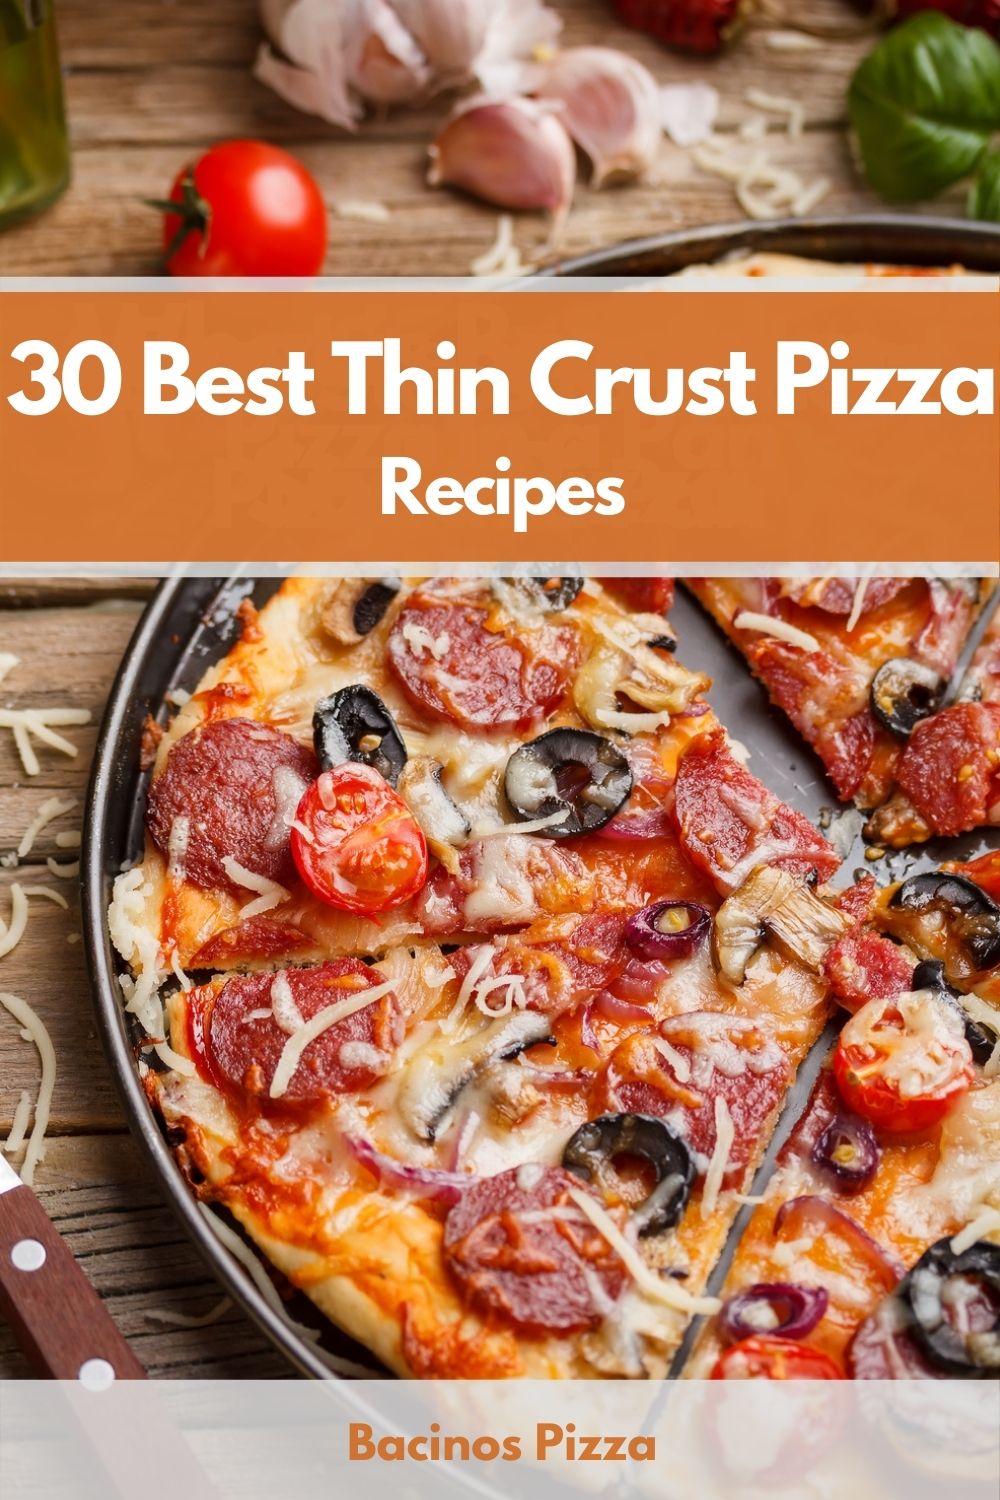 30 Best Thin Crust Pizza Recipes pin